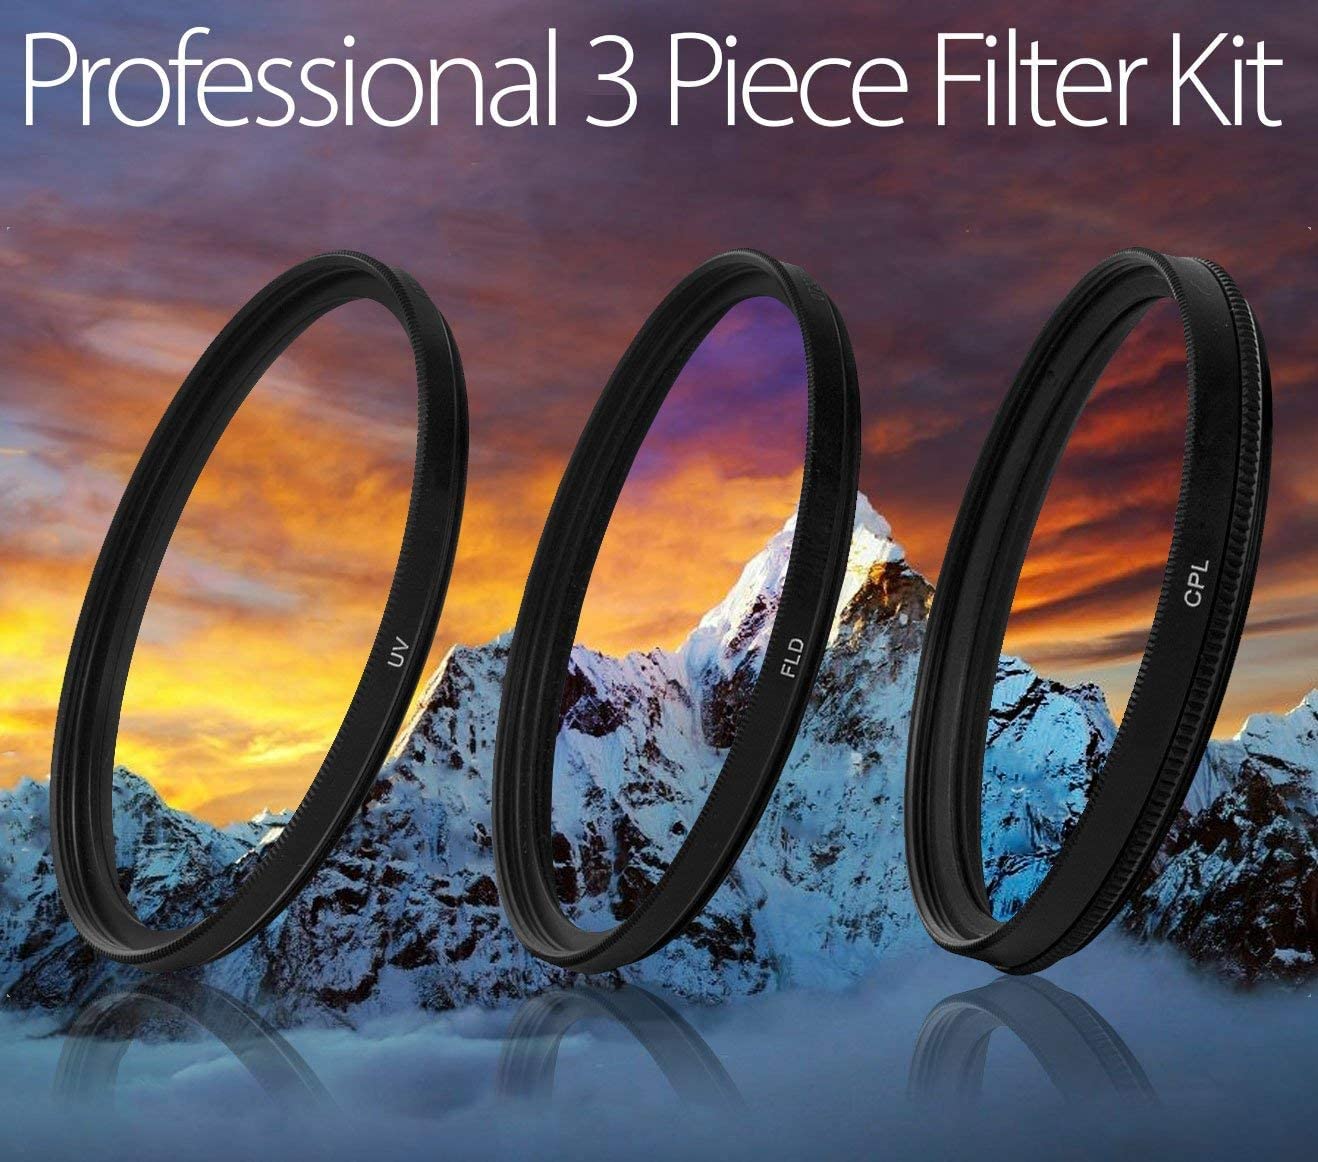 Nikon AF-S DX Micro NIKKOR 40mm f/2.8G Prime Lens (2200) with Padded Lens Case + Macro Filter Kit + UV, CPL, FL Lens Filters + Tulip Hood + Lens Cap Keeper + Cleaning Kit (Renewed)